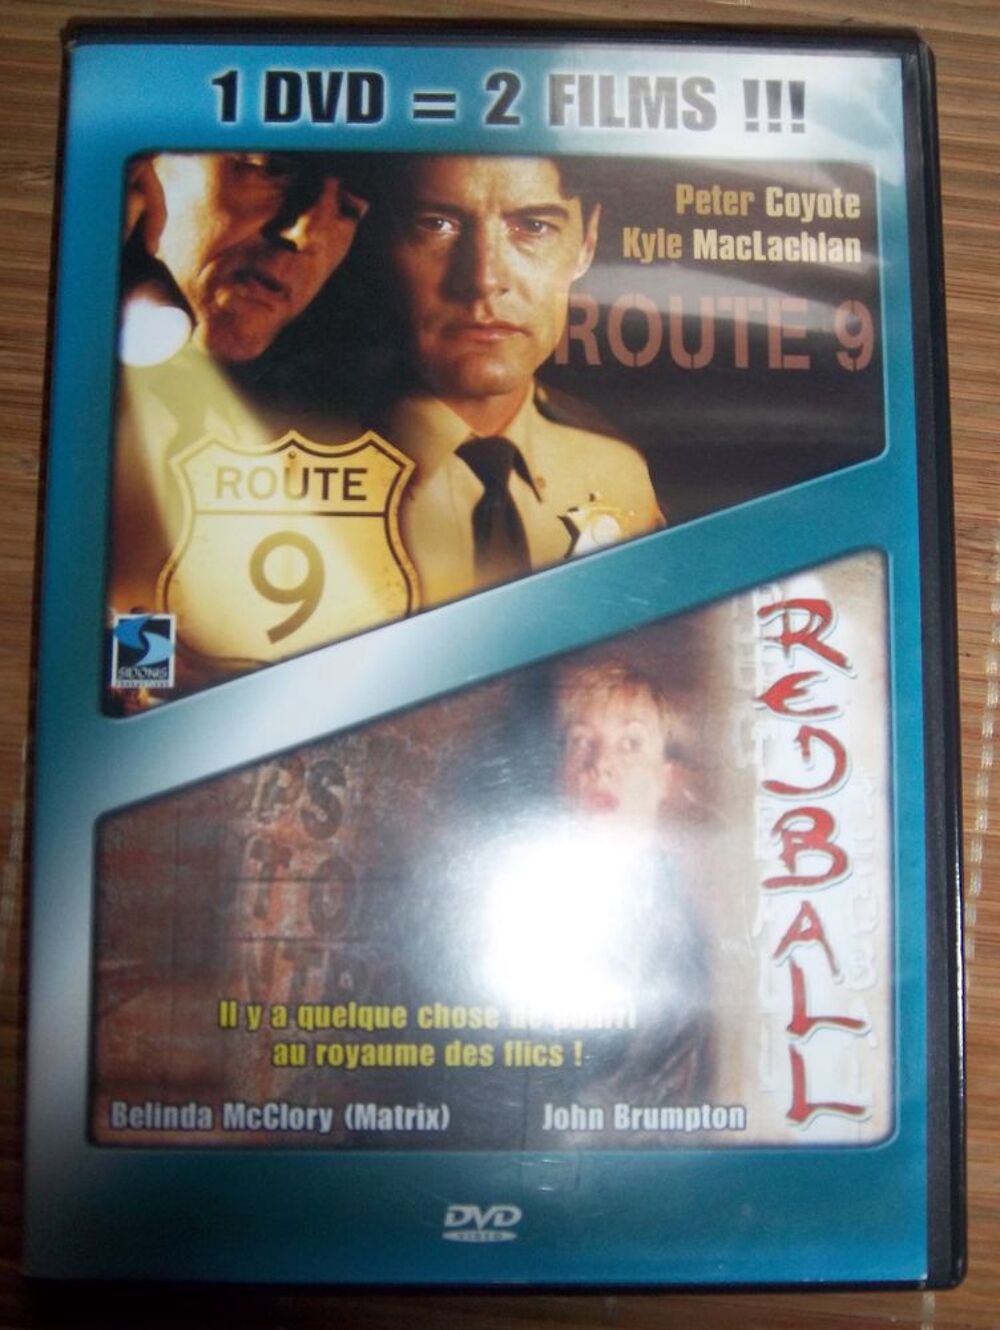 1 dvd 2 films route 9 + Redball DVD et blu-ray